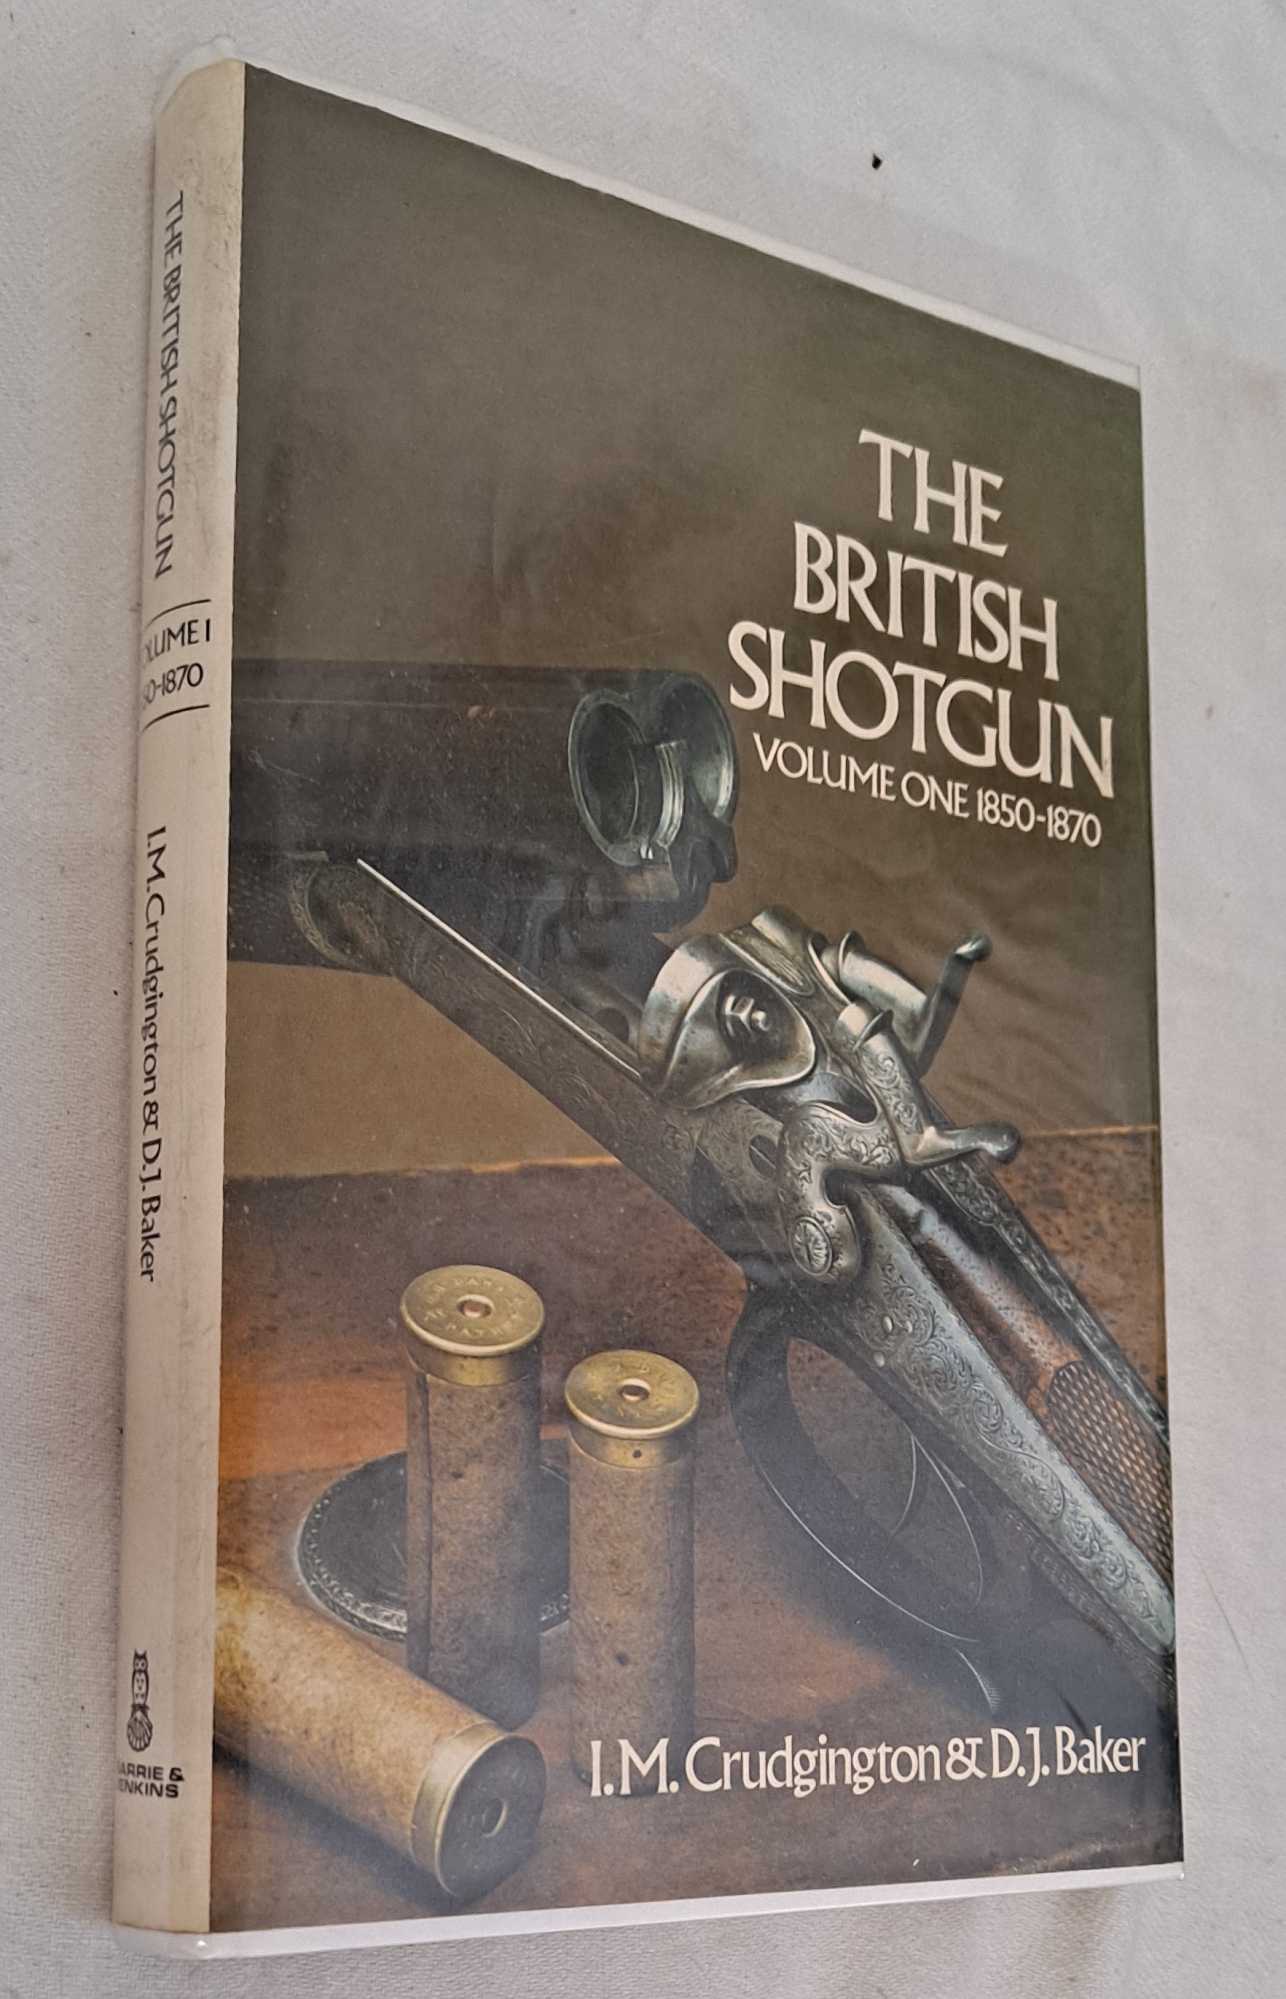 I M Crudgington and D J Baker - The British Shotgun Volume One 1850-1870